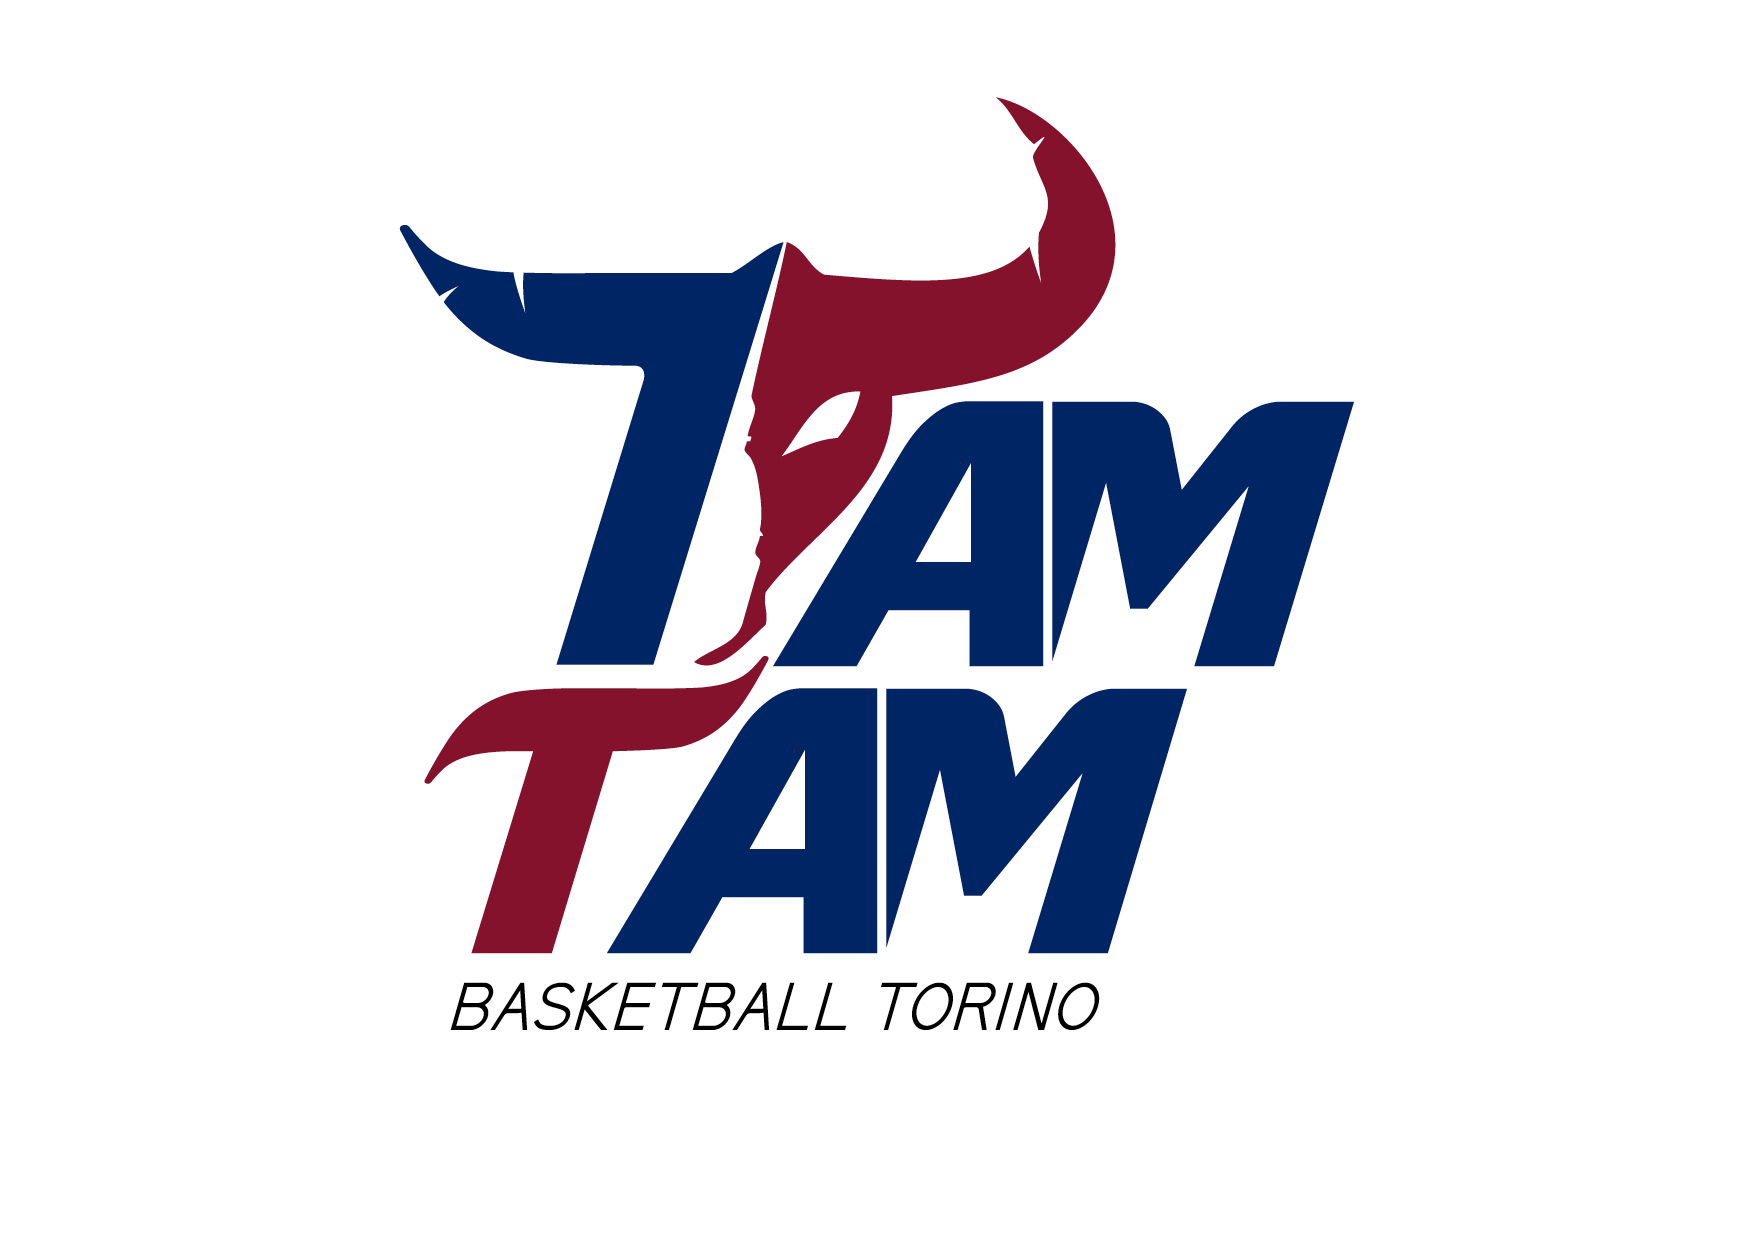 TAMTAM Basketball Torino